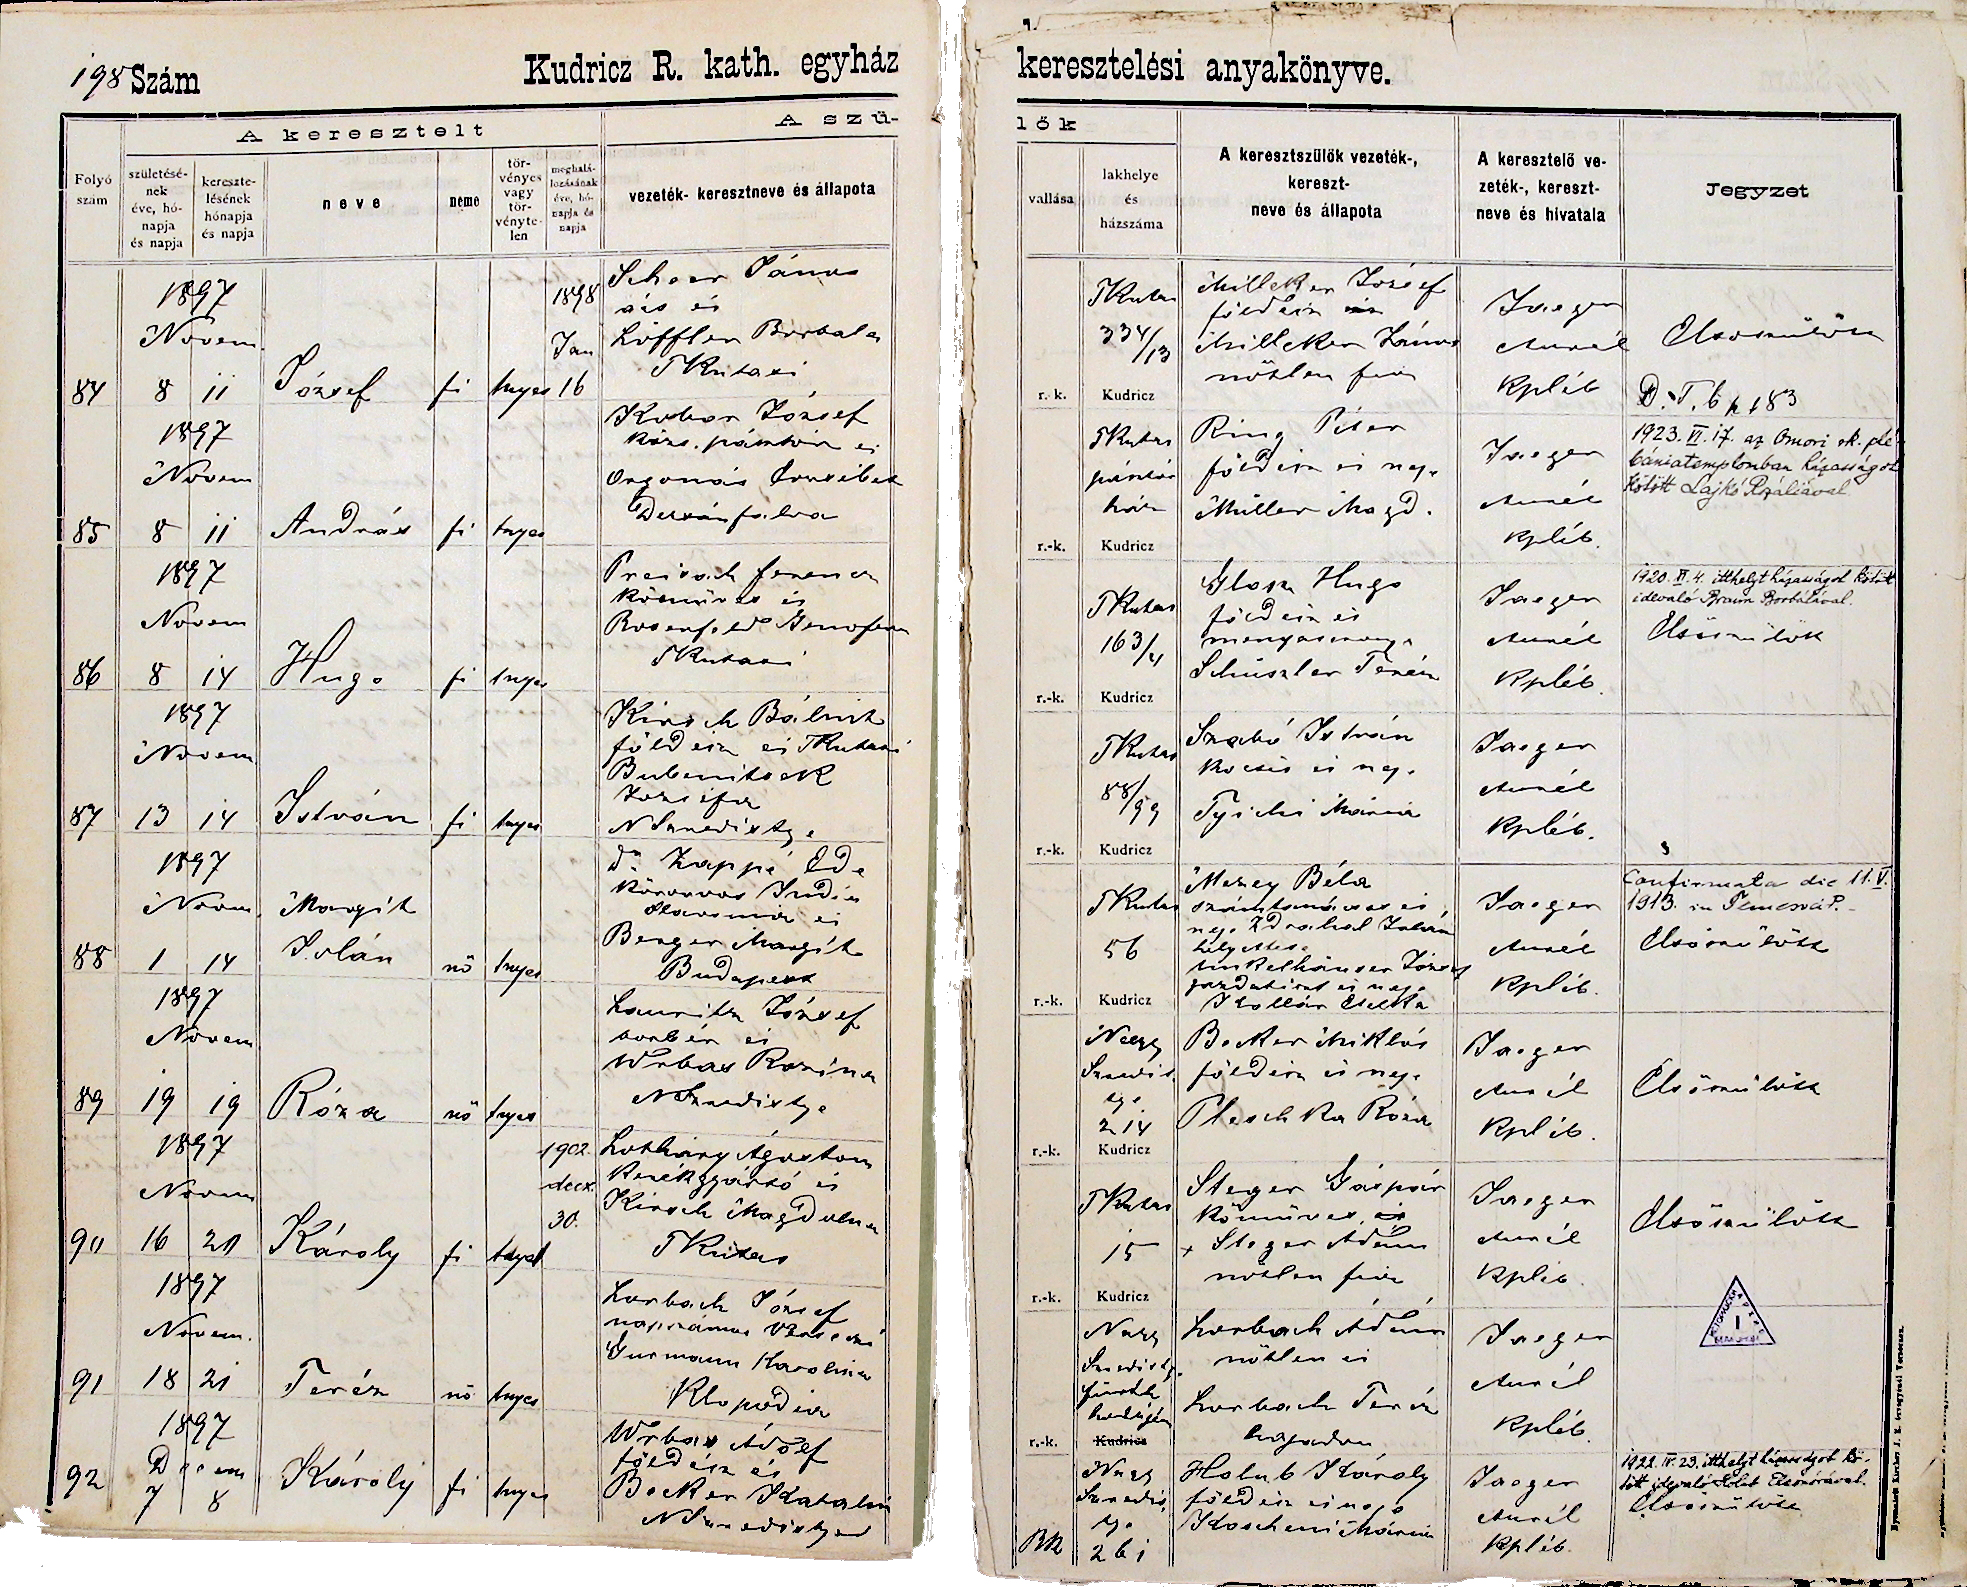 images/church_records/BIRTHS/1884-1899B/1897/198